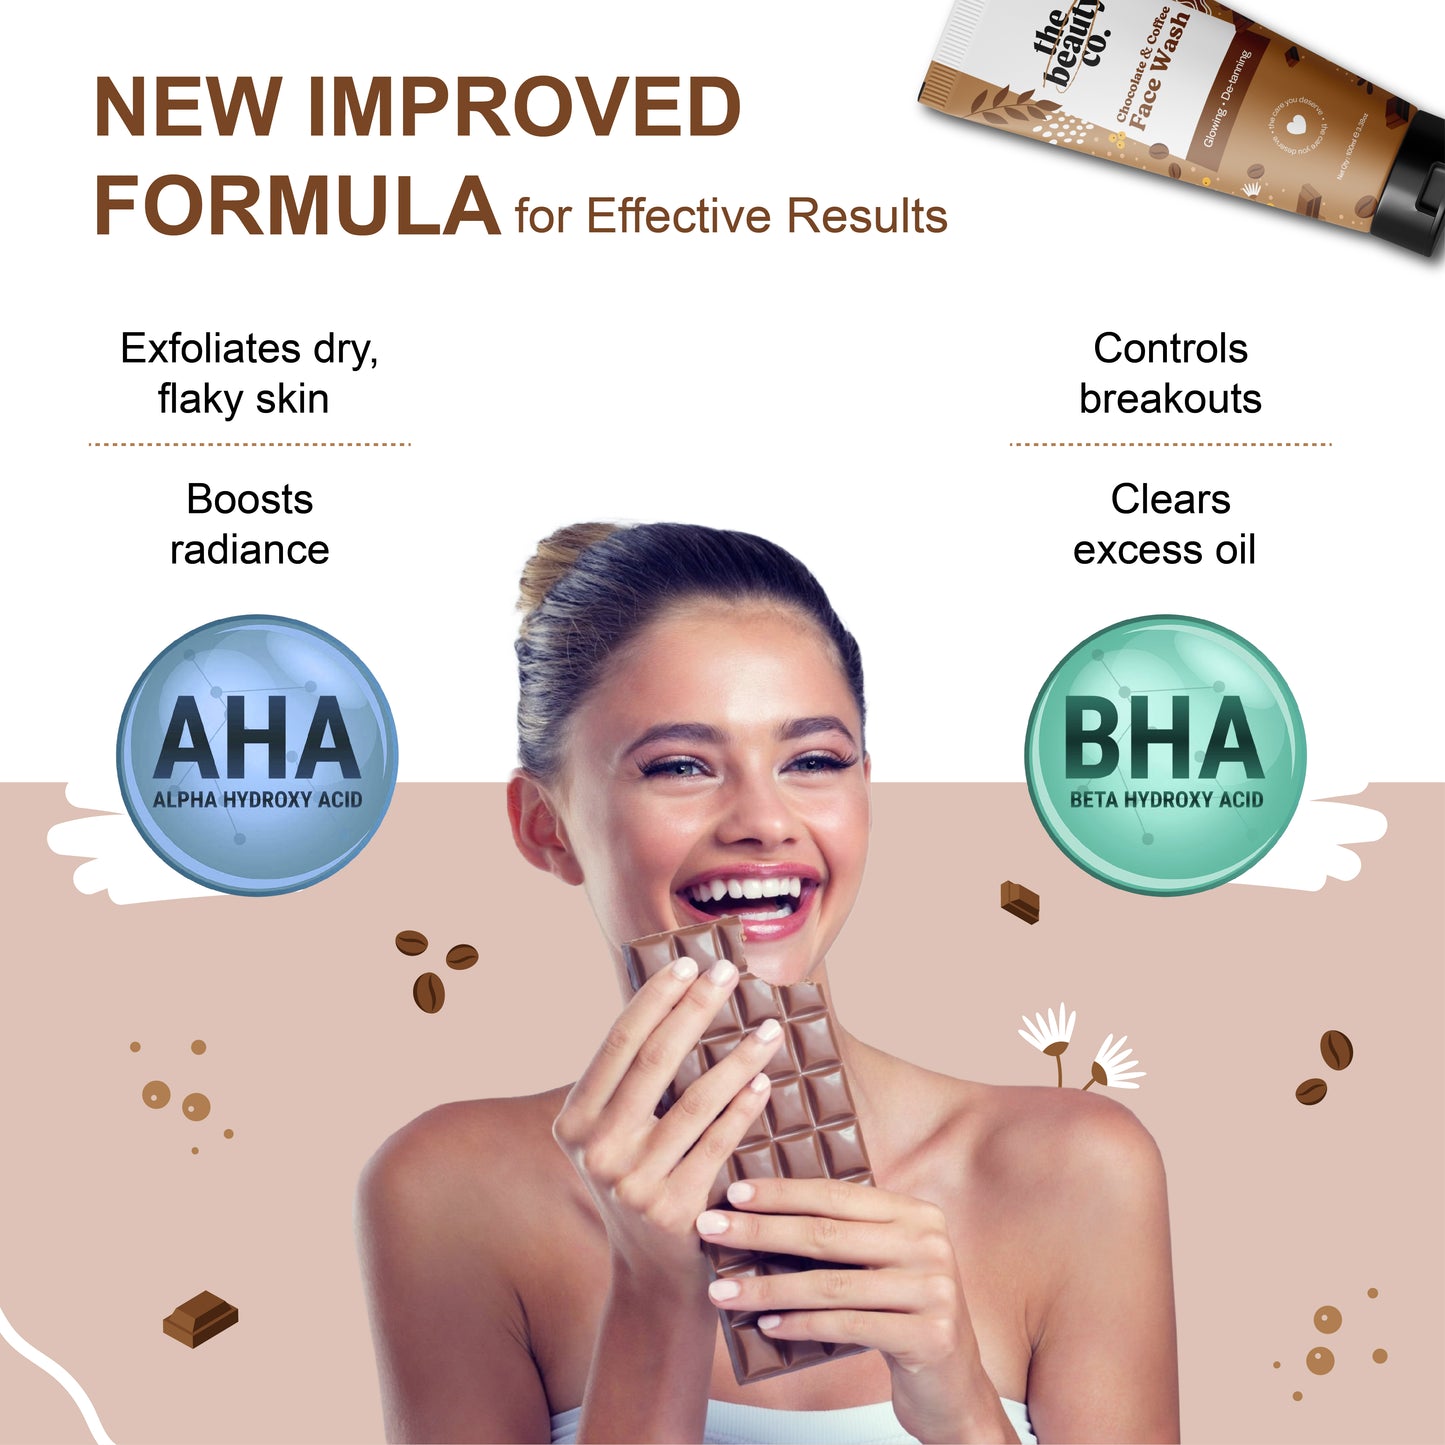 Chocolate & Coffee Face Wash With AHA & BHA | 100 ml